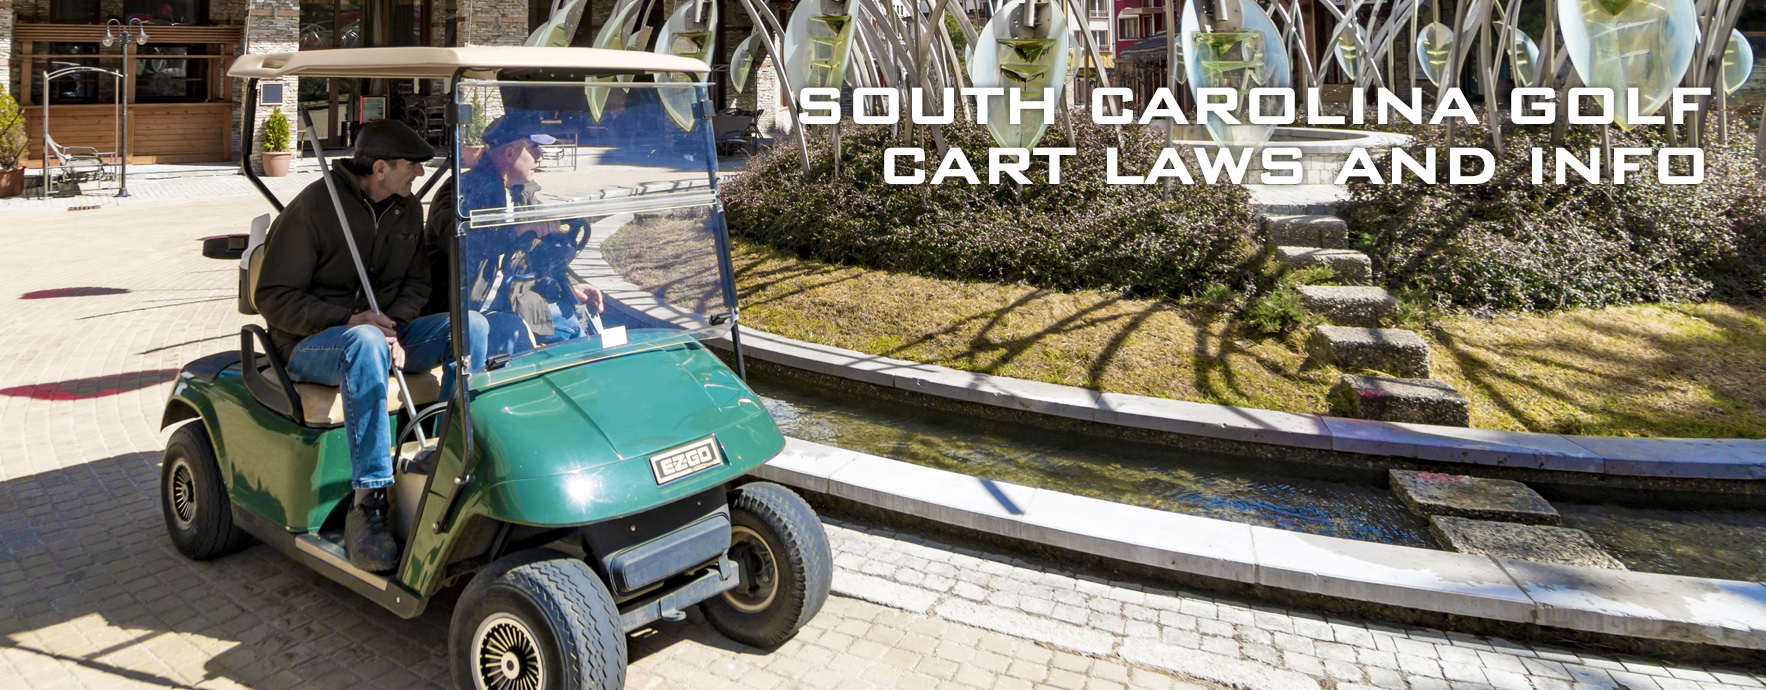 Charleston Golf Cart Laws & SC DMV Regulations - Charleston Golf Carts